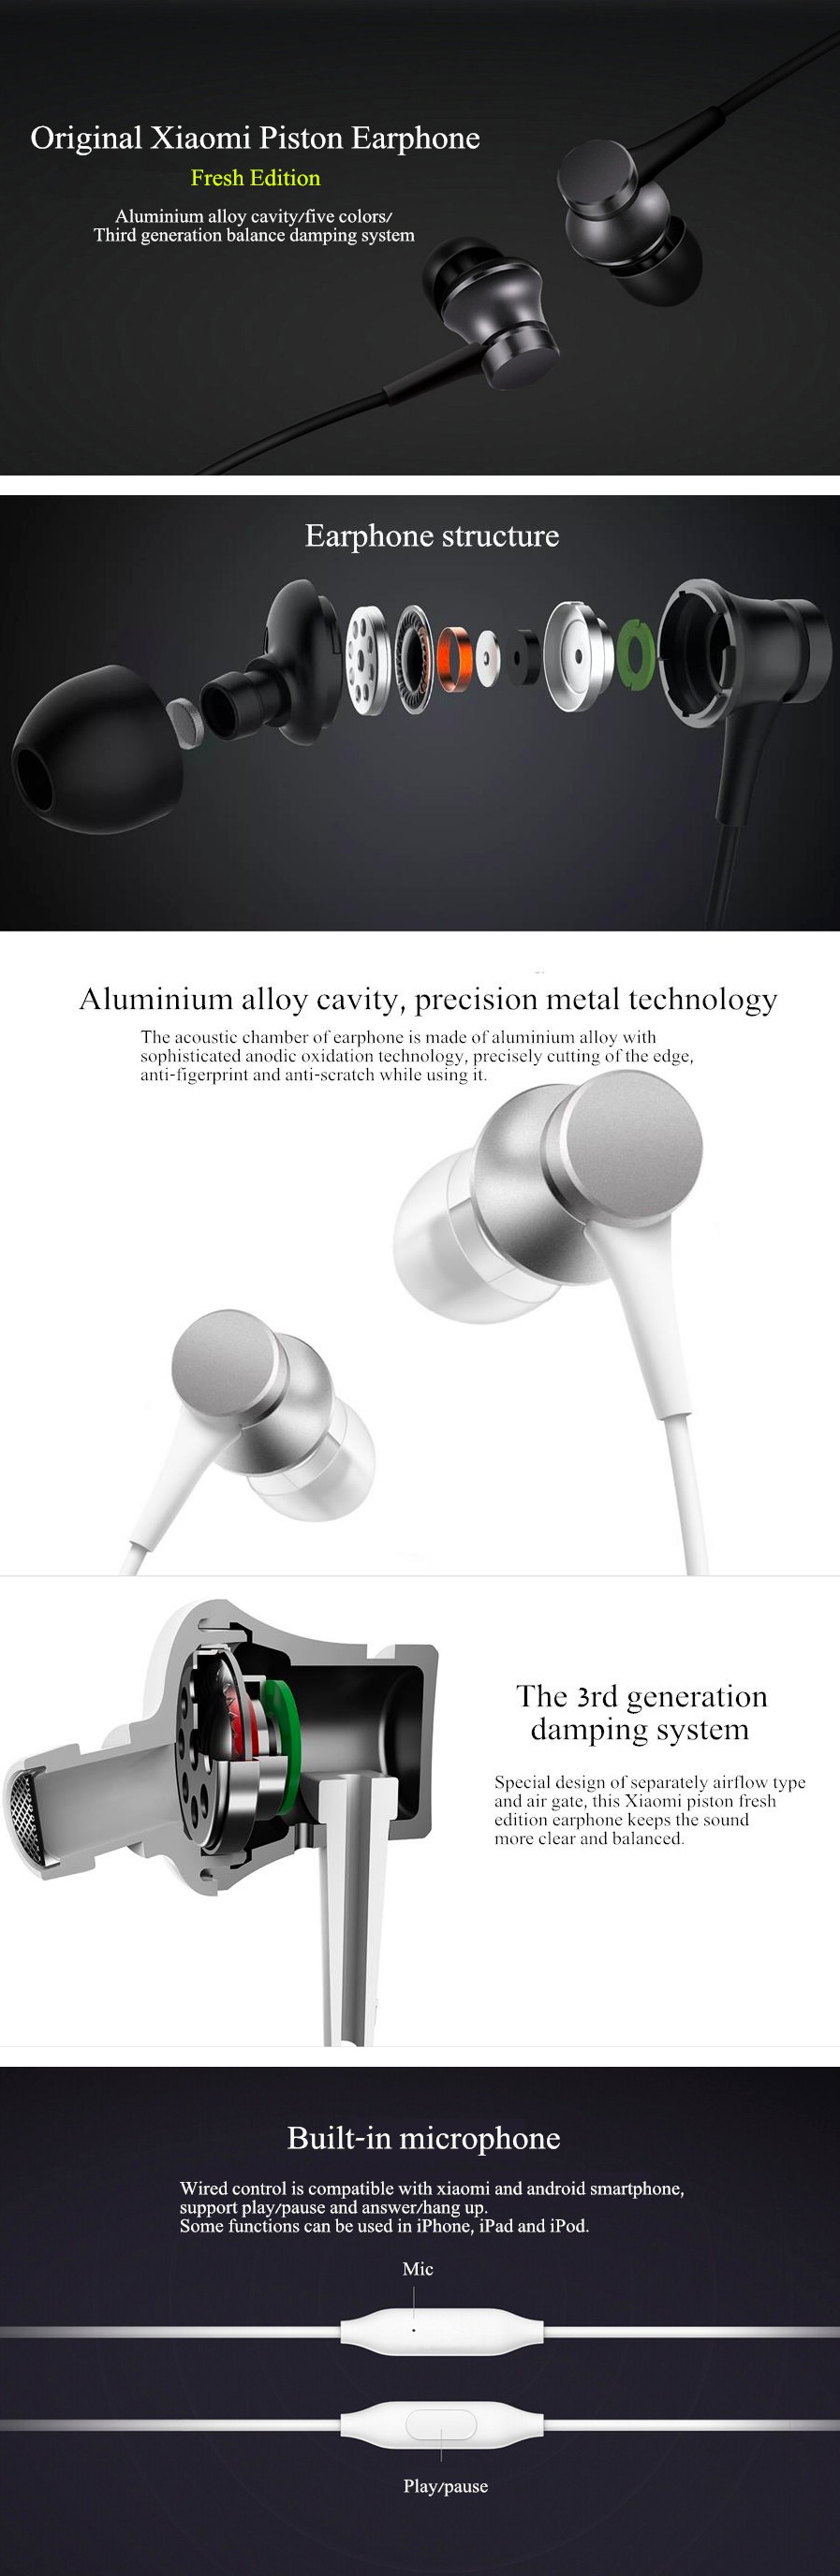 original xiaomi piston fresh edition earphones